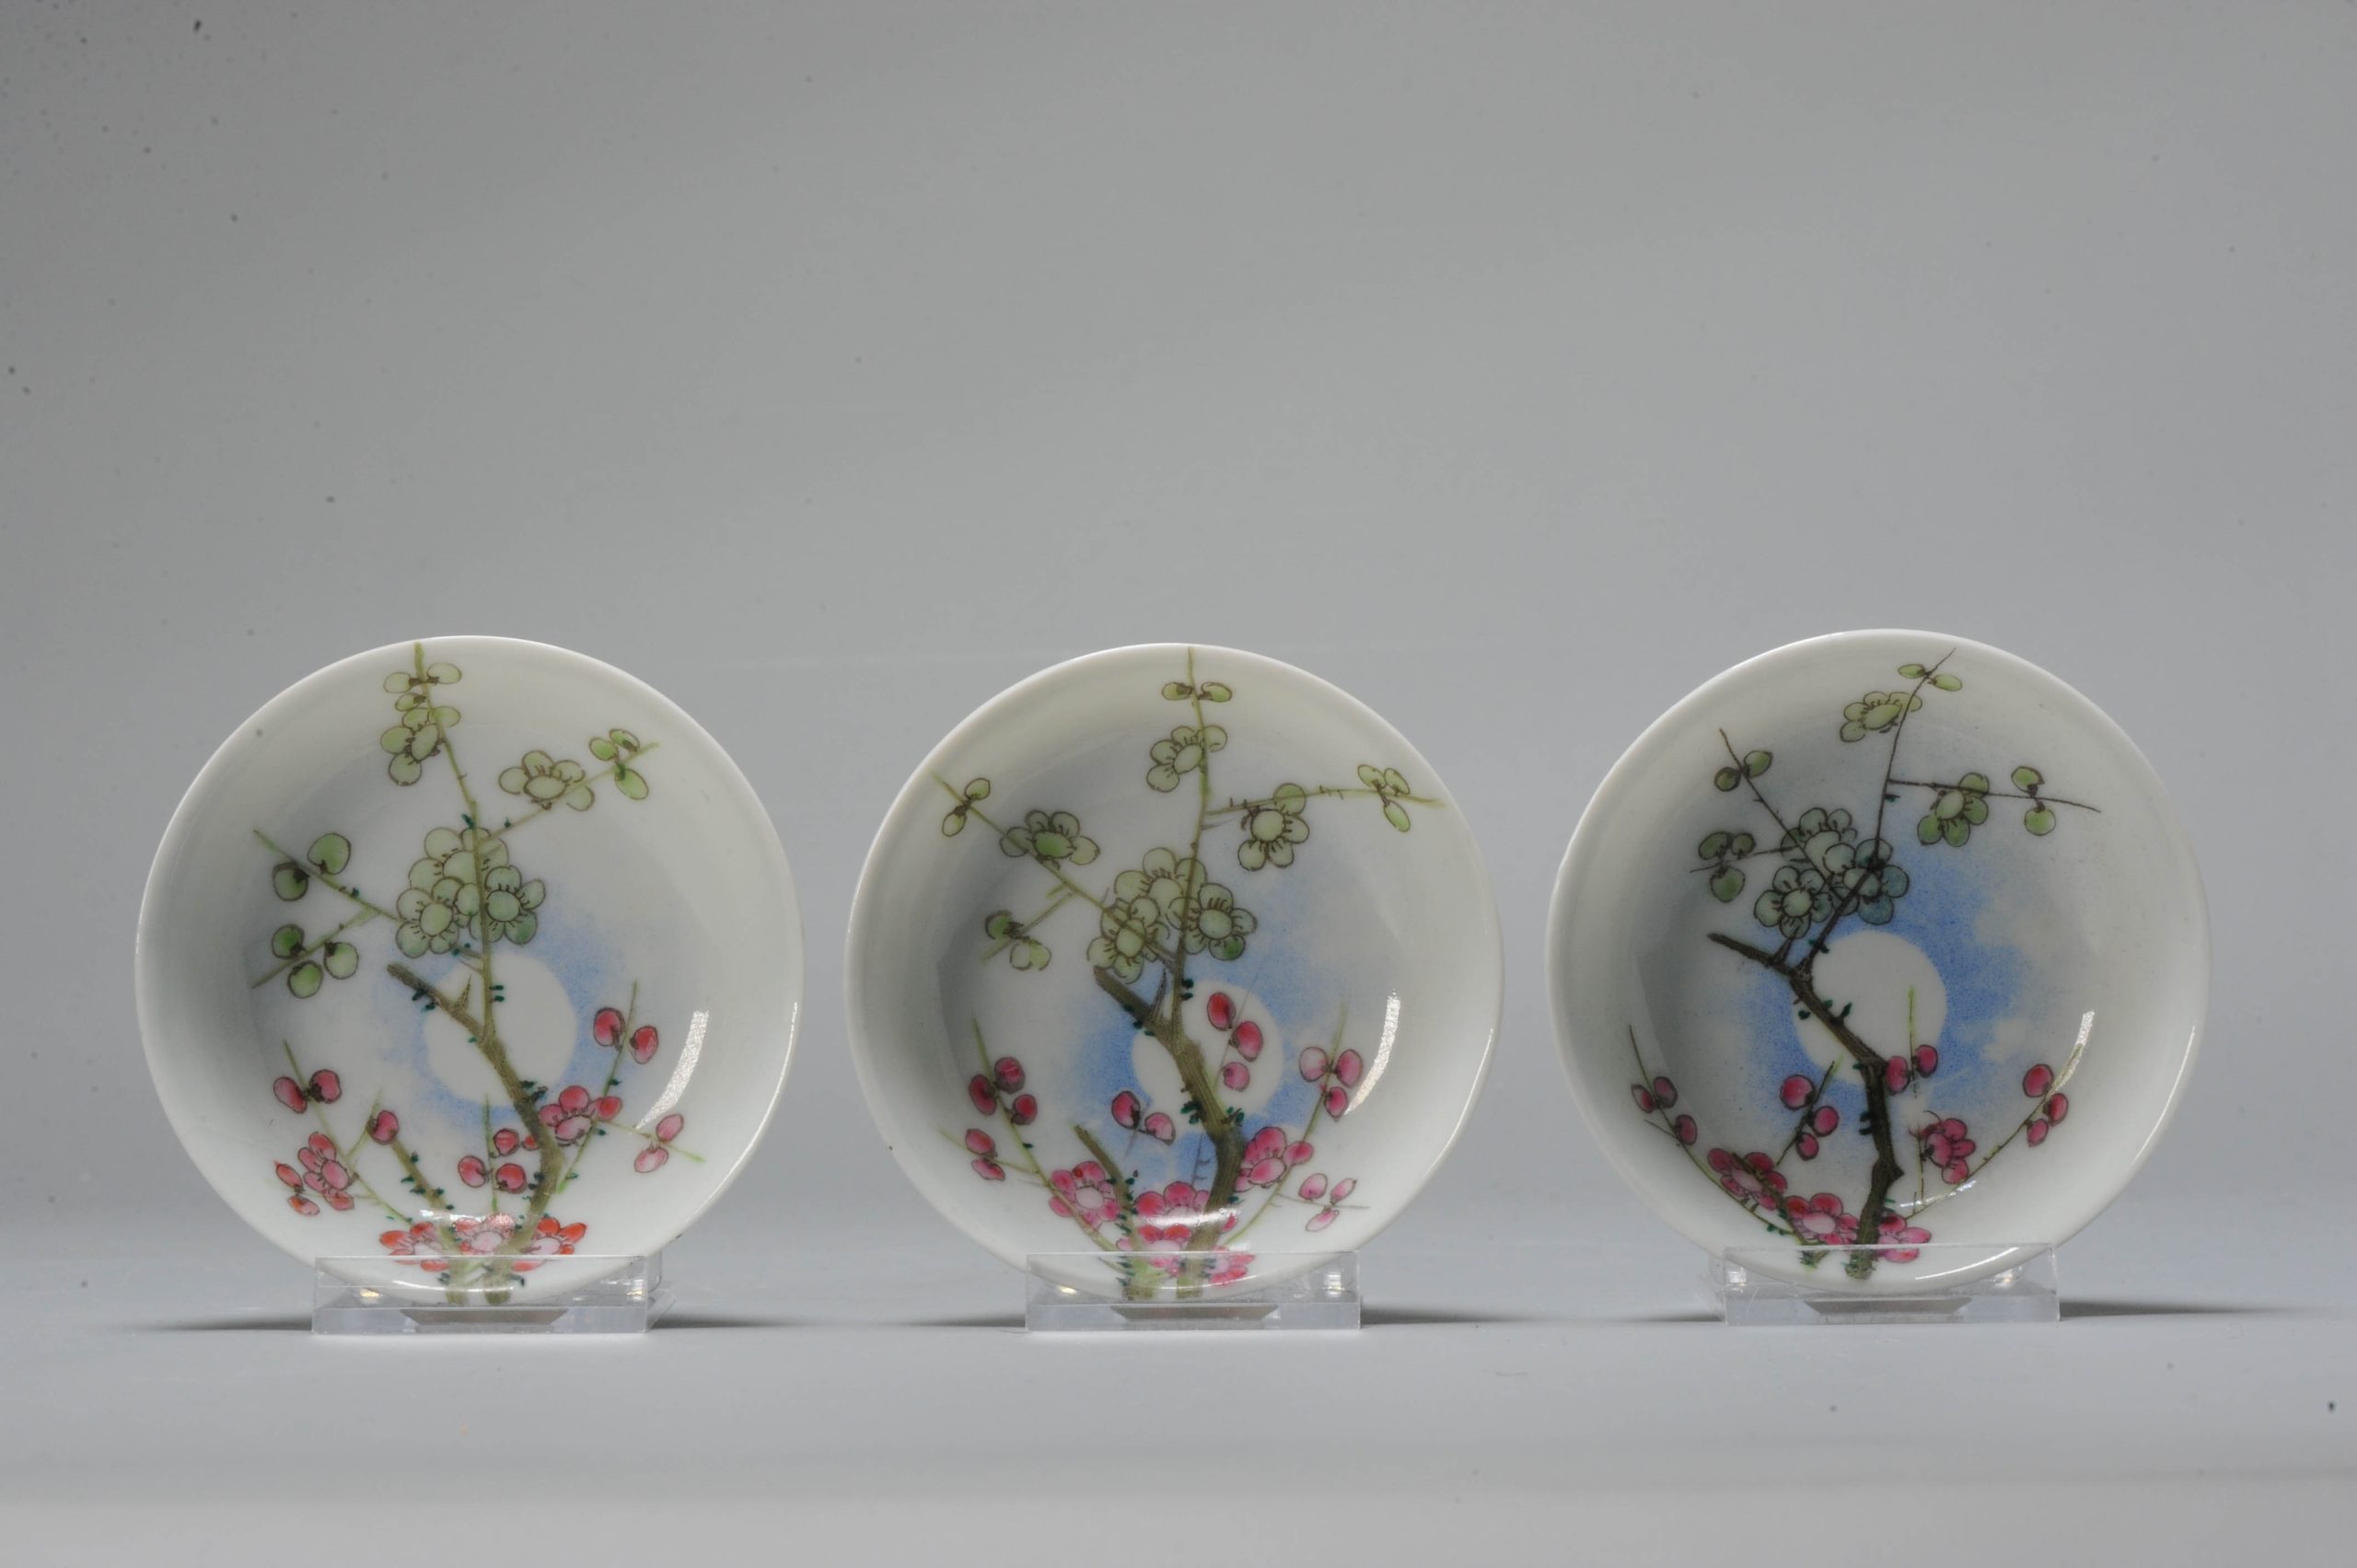 Antique Meiji period Japanese Porcelain Kaiseki set bowls Japan 19th/20th century